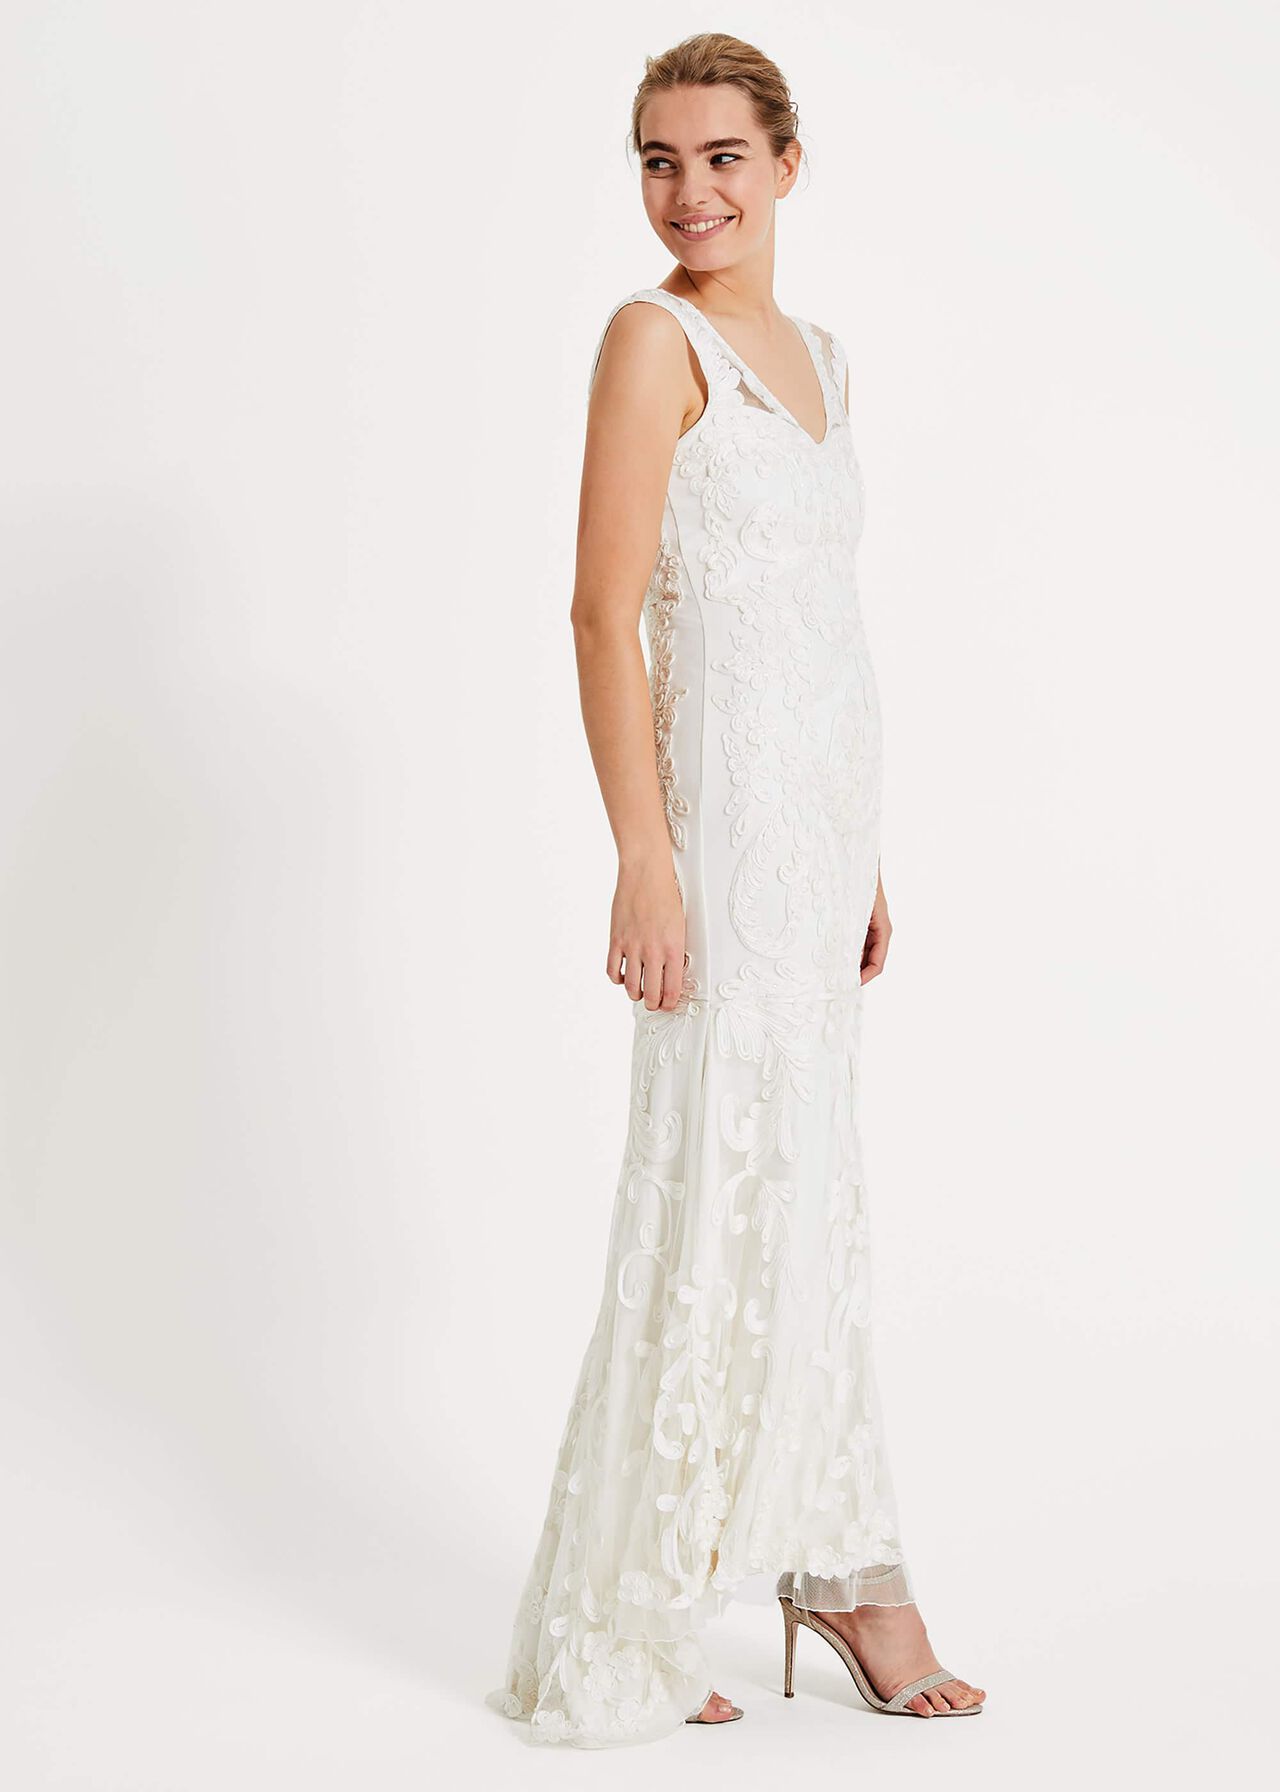 Valerie Tapework Lace Wedding Dress